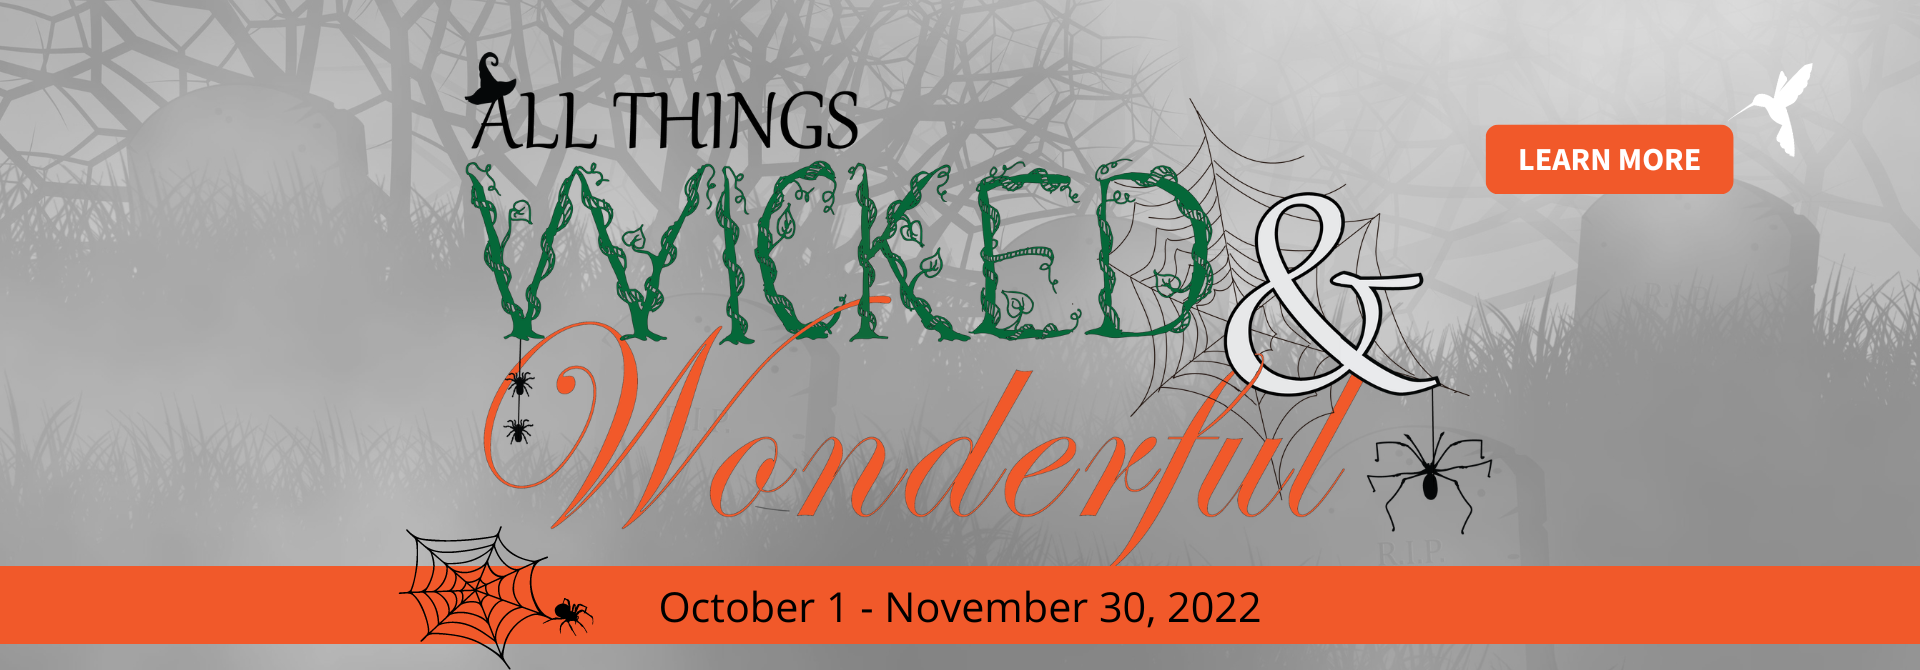 All Things Wicked & Wonderful